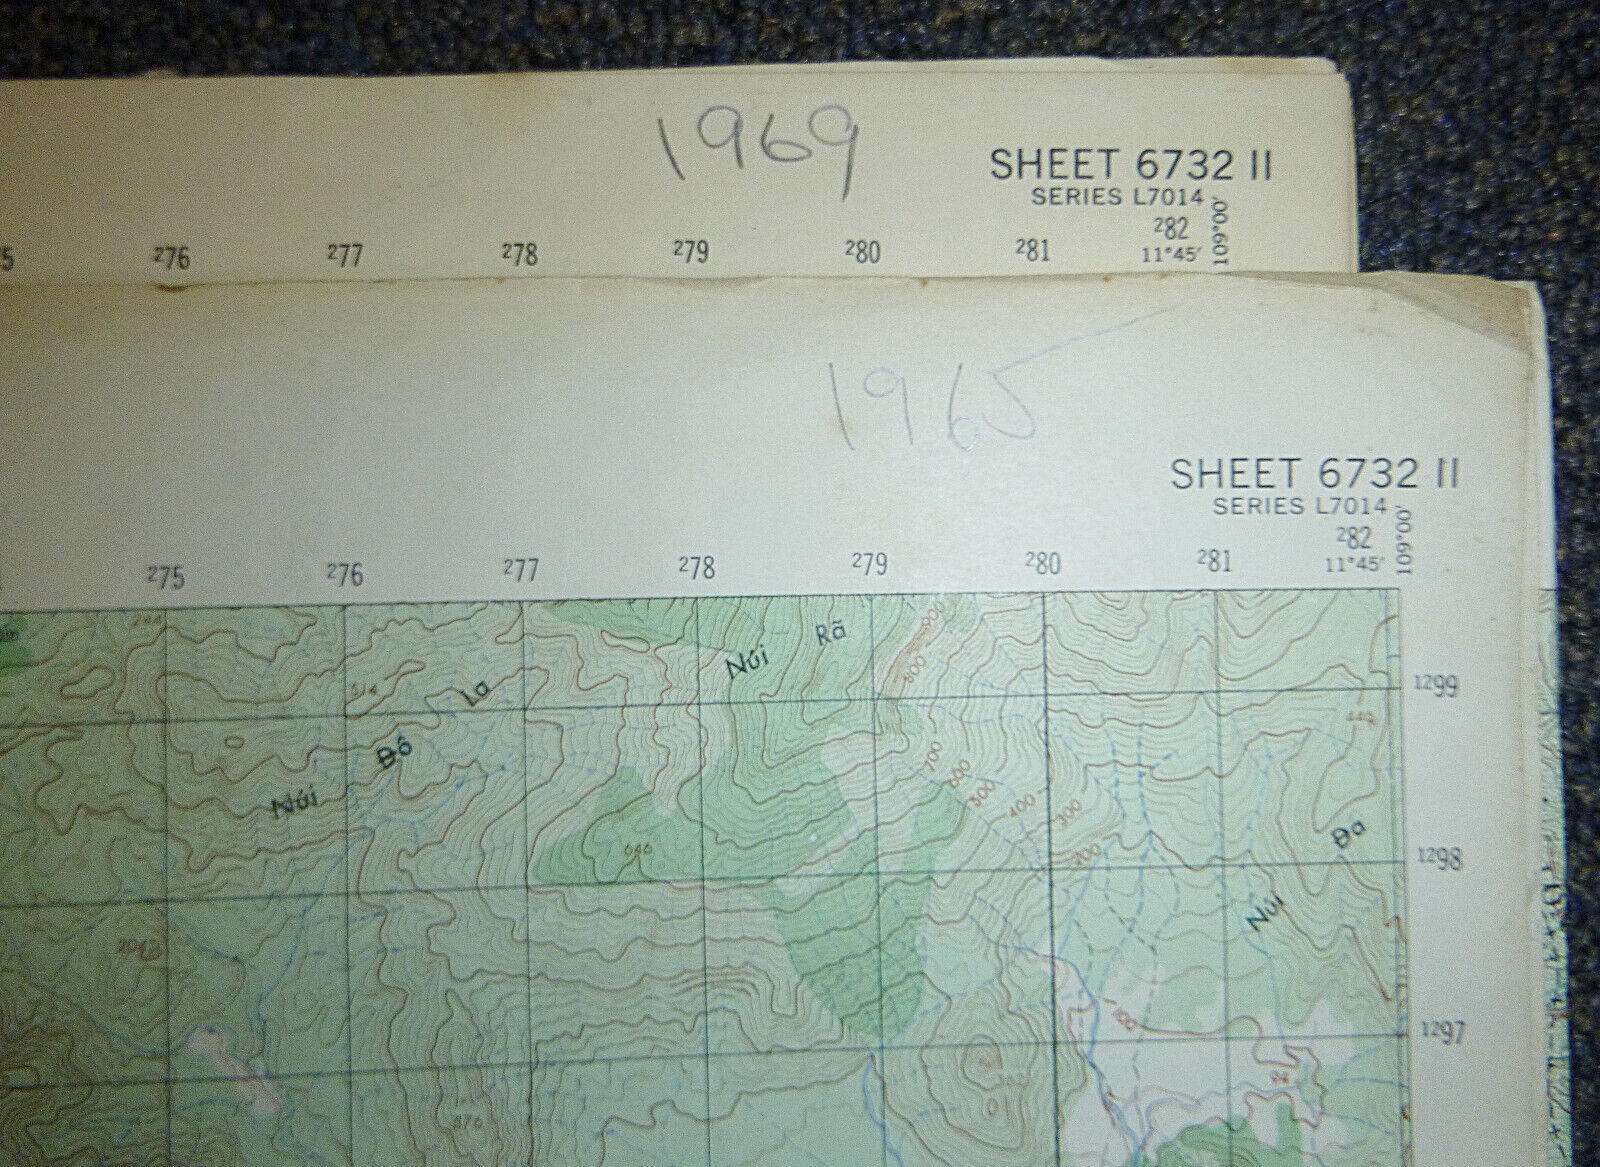 6732 ii - Rare Set of 2 x MAP - PHAN RANG AIR BASE - 1965 and 1969 - Vietnam War